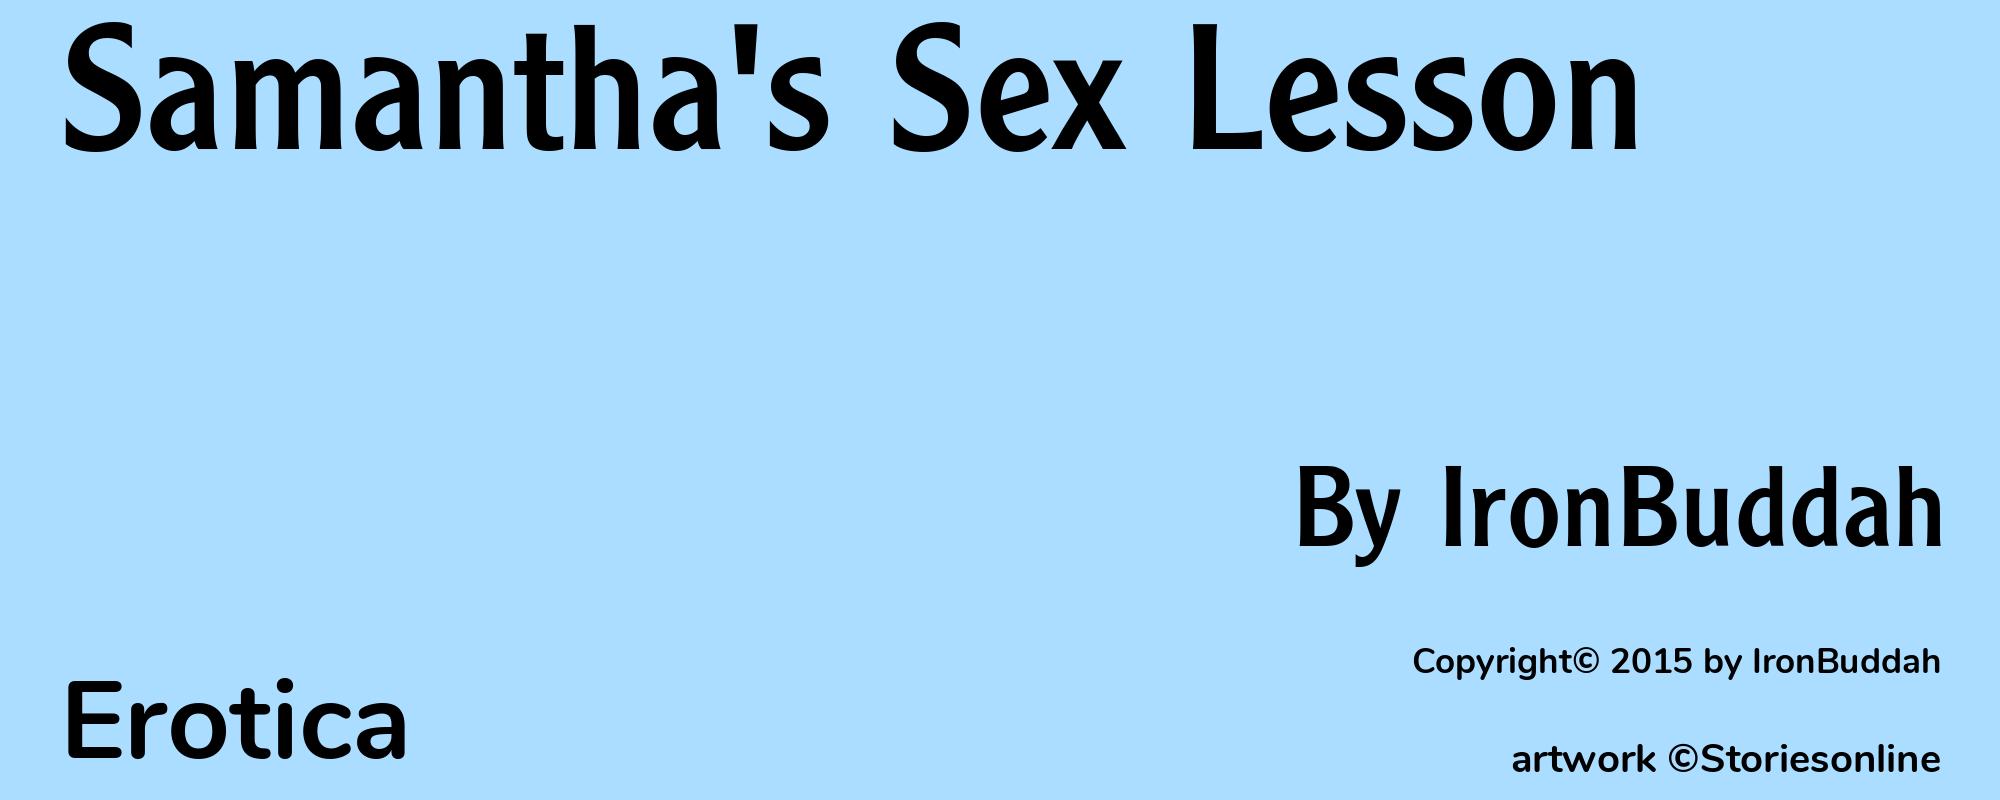 Samantha's Sex Lesson - Cover